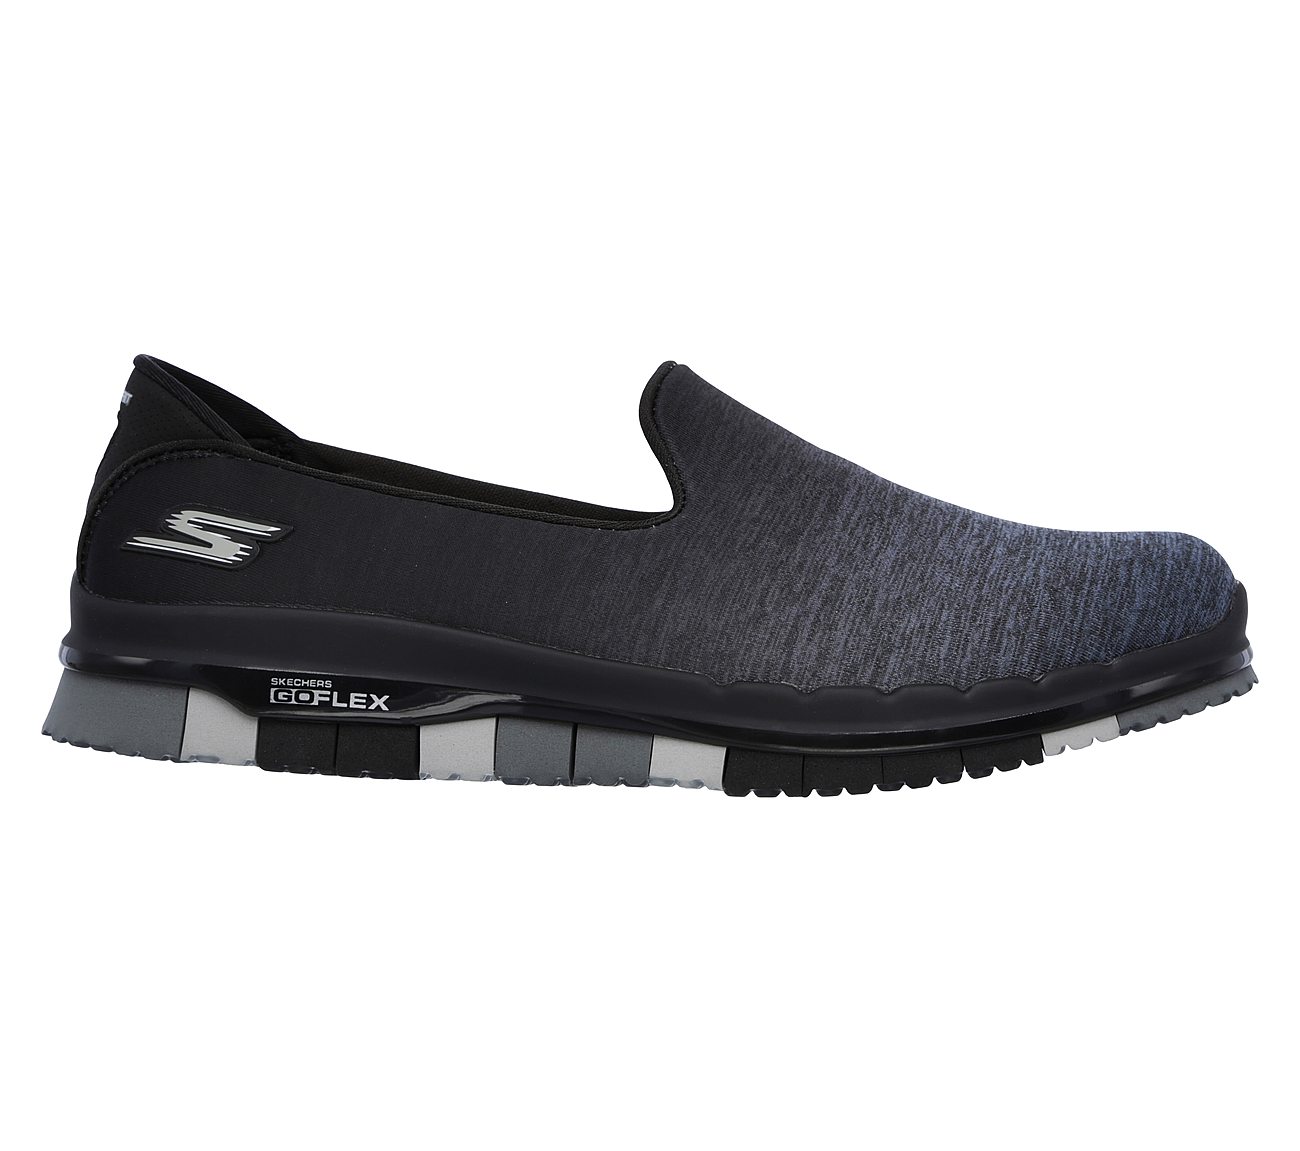 Buy SKECHERS Skechers GO FLEX Walk - Muse Skechers Performance Shoes